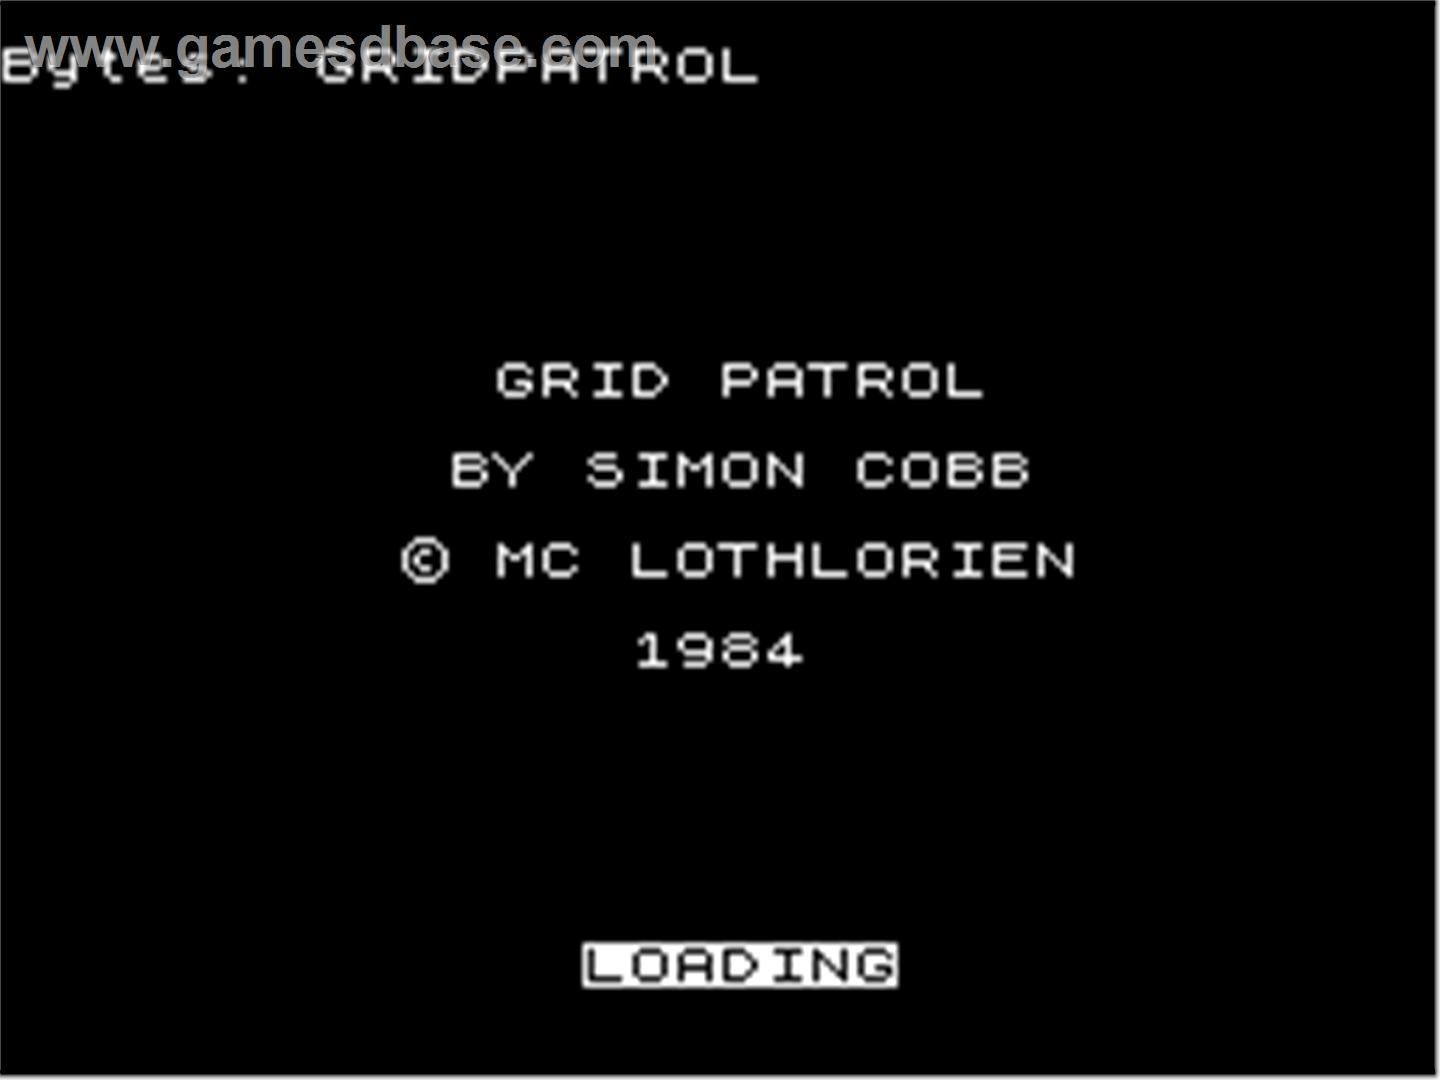 Grid Patrol (1984)(MC Lothlorien)[a]